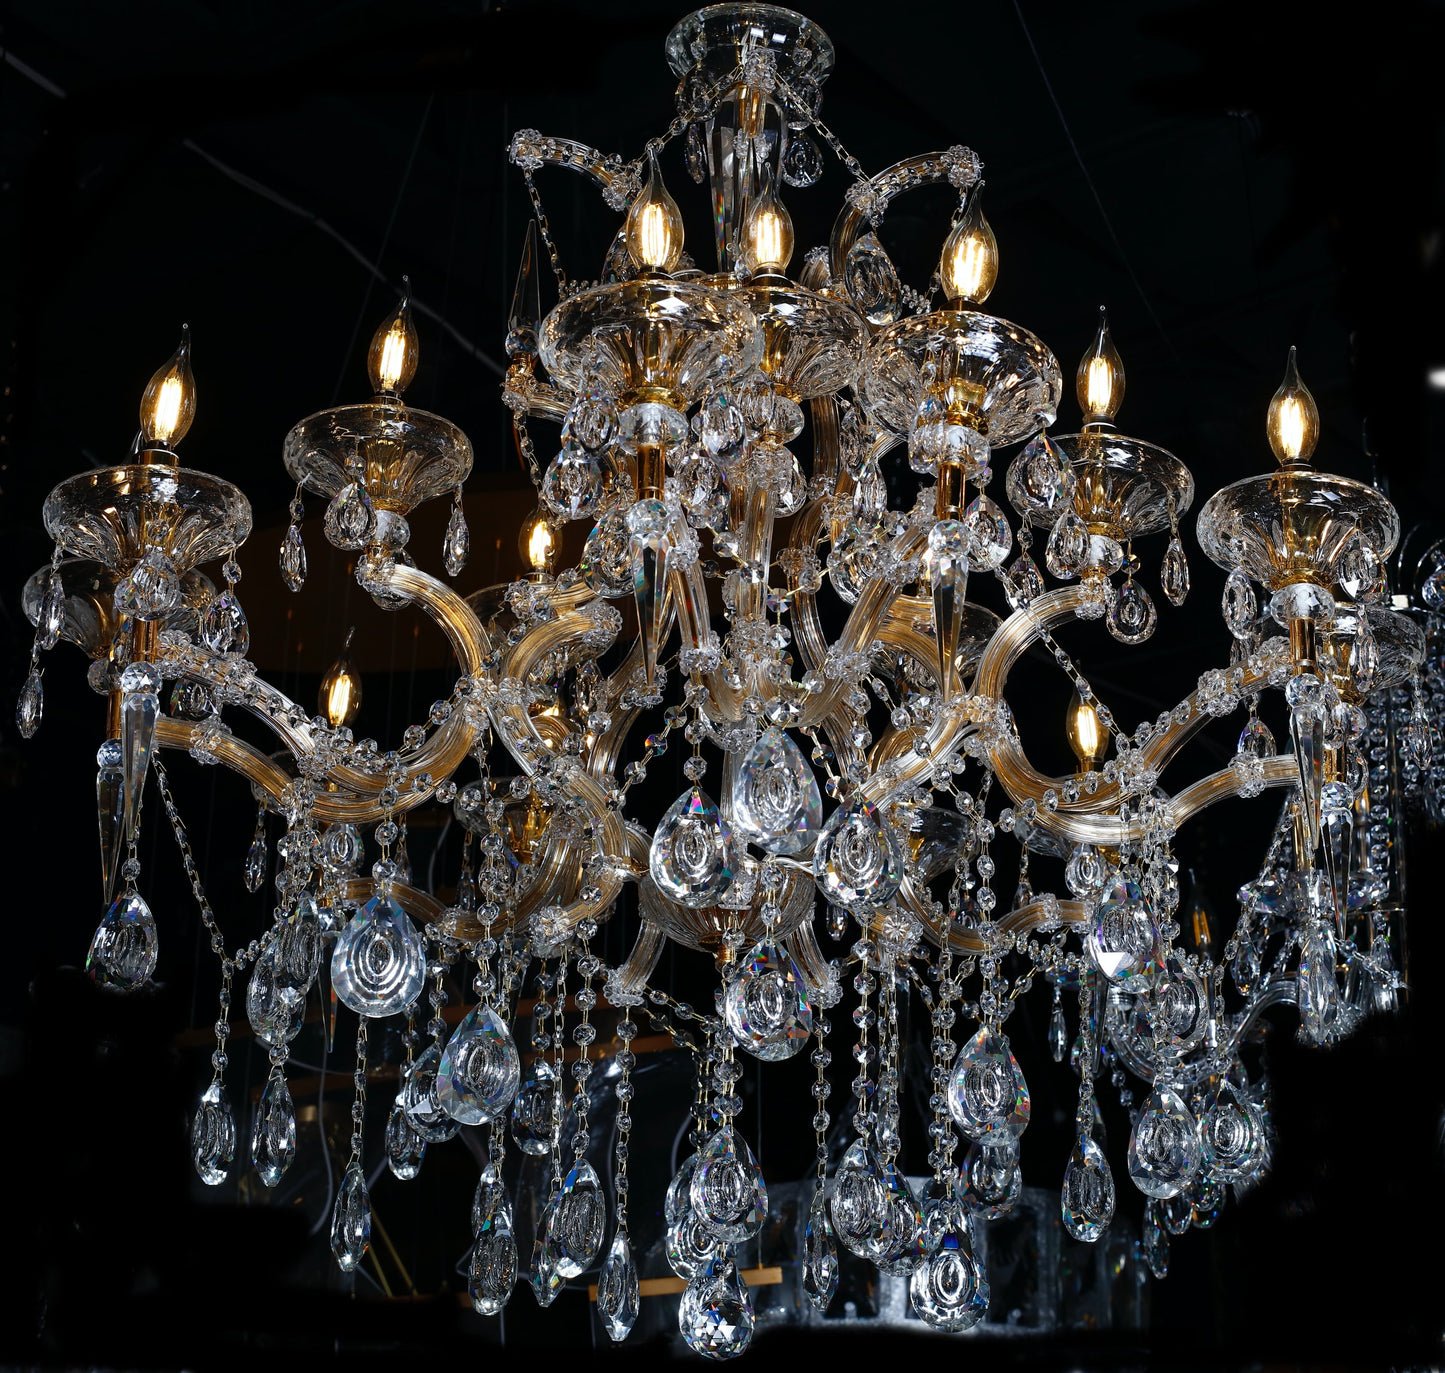 Maria Theresa 35" Wide Gold 15-Light Crystal Chandelier - Spot Light Inc